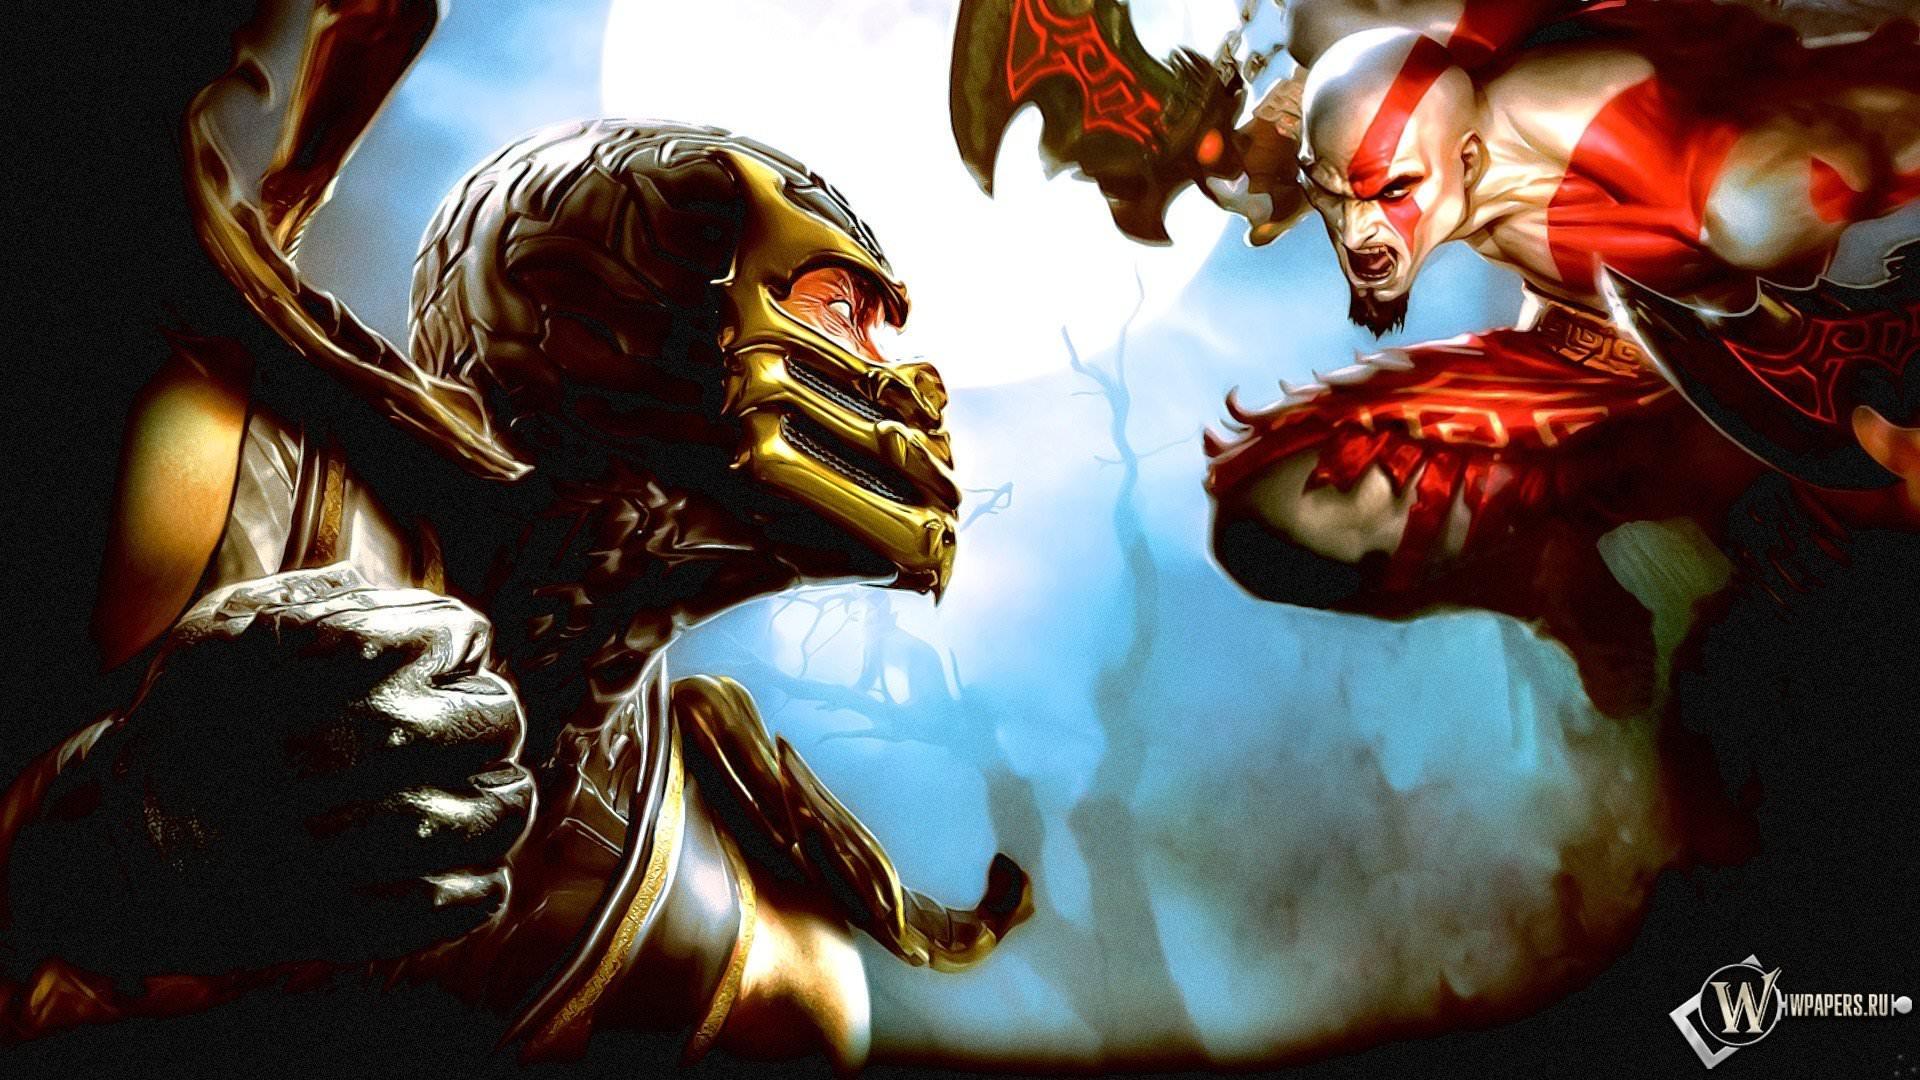 Kratos (God Of War) wallpaper 1920x1080 Full HD (1080p) desktop